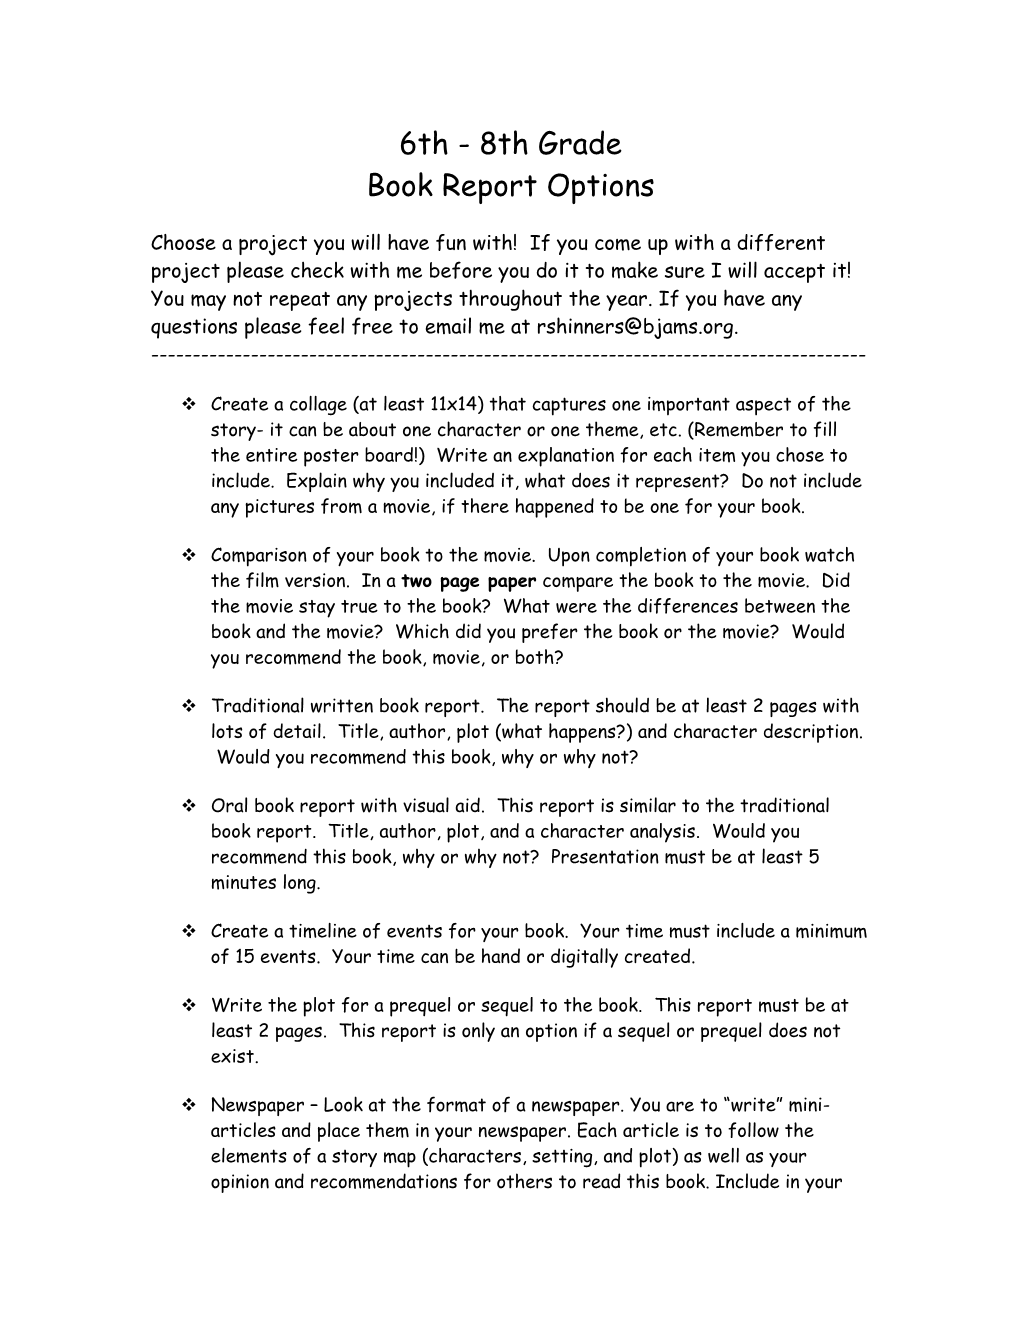 Book Report Options